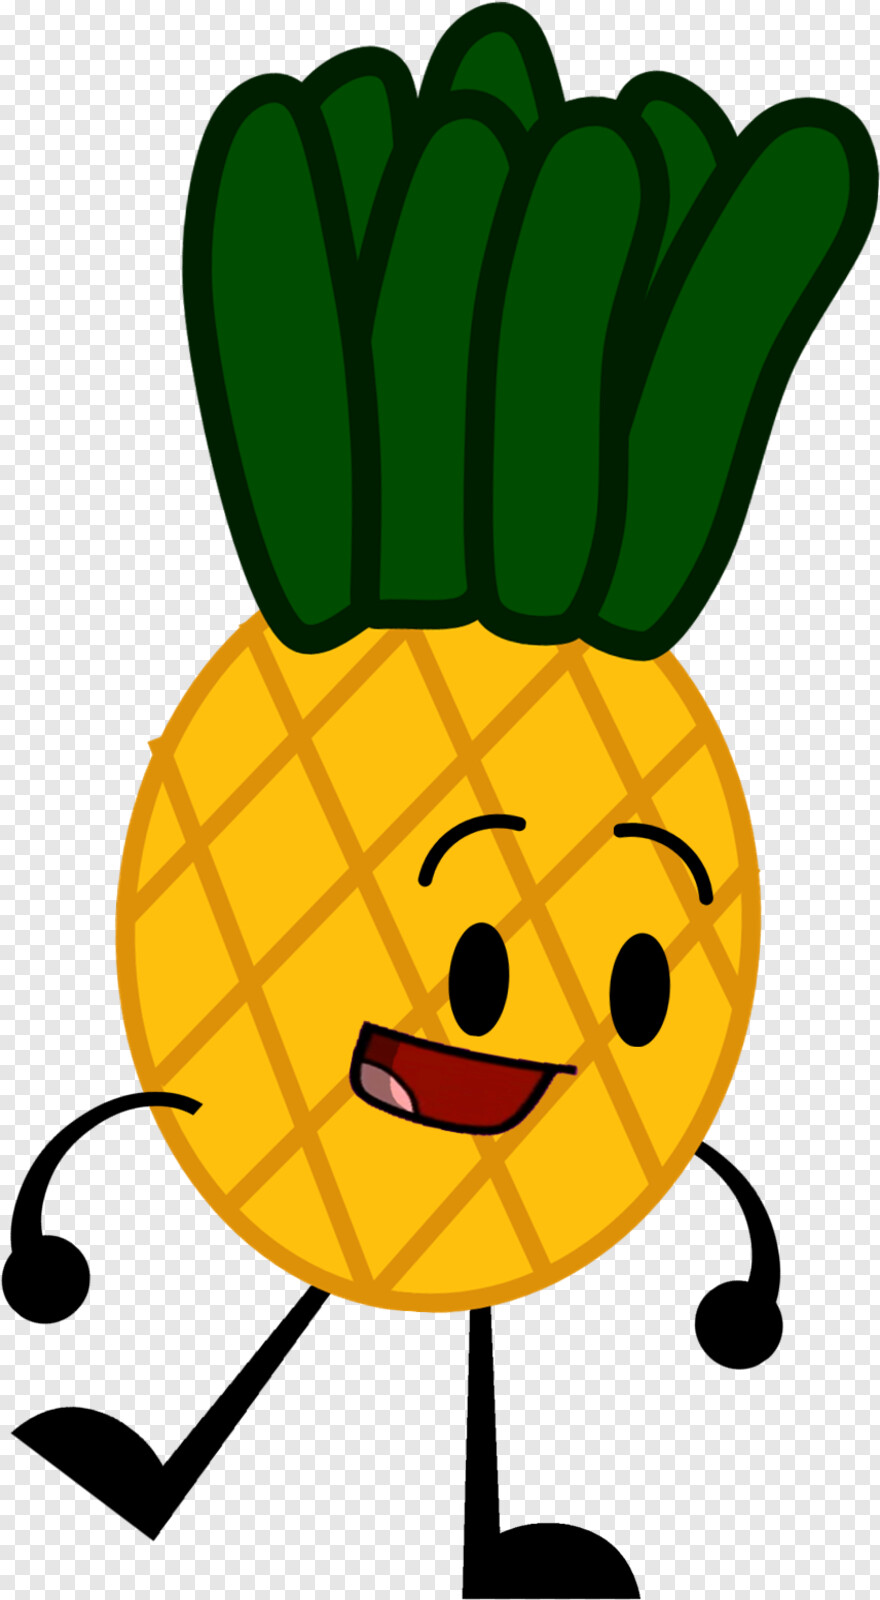 pineapple # 672097